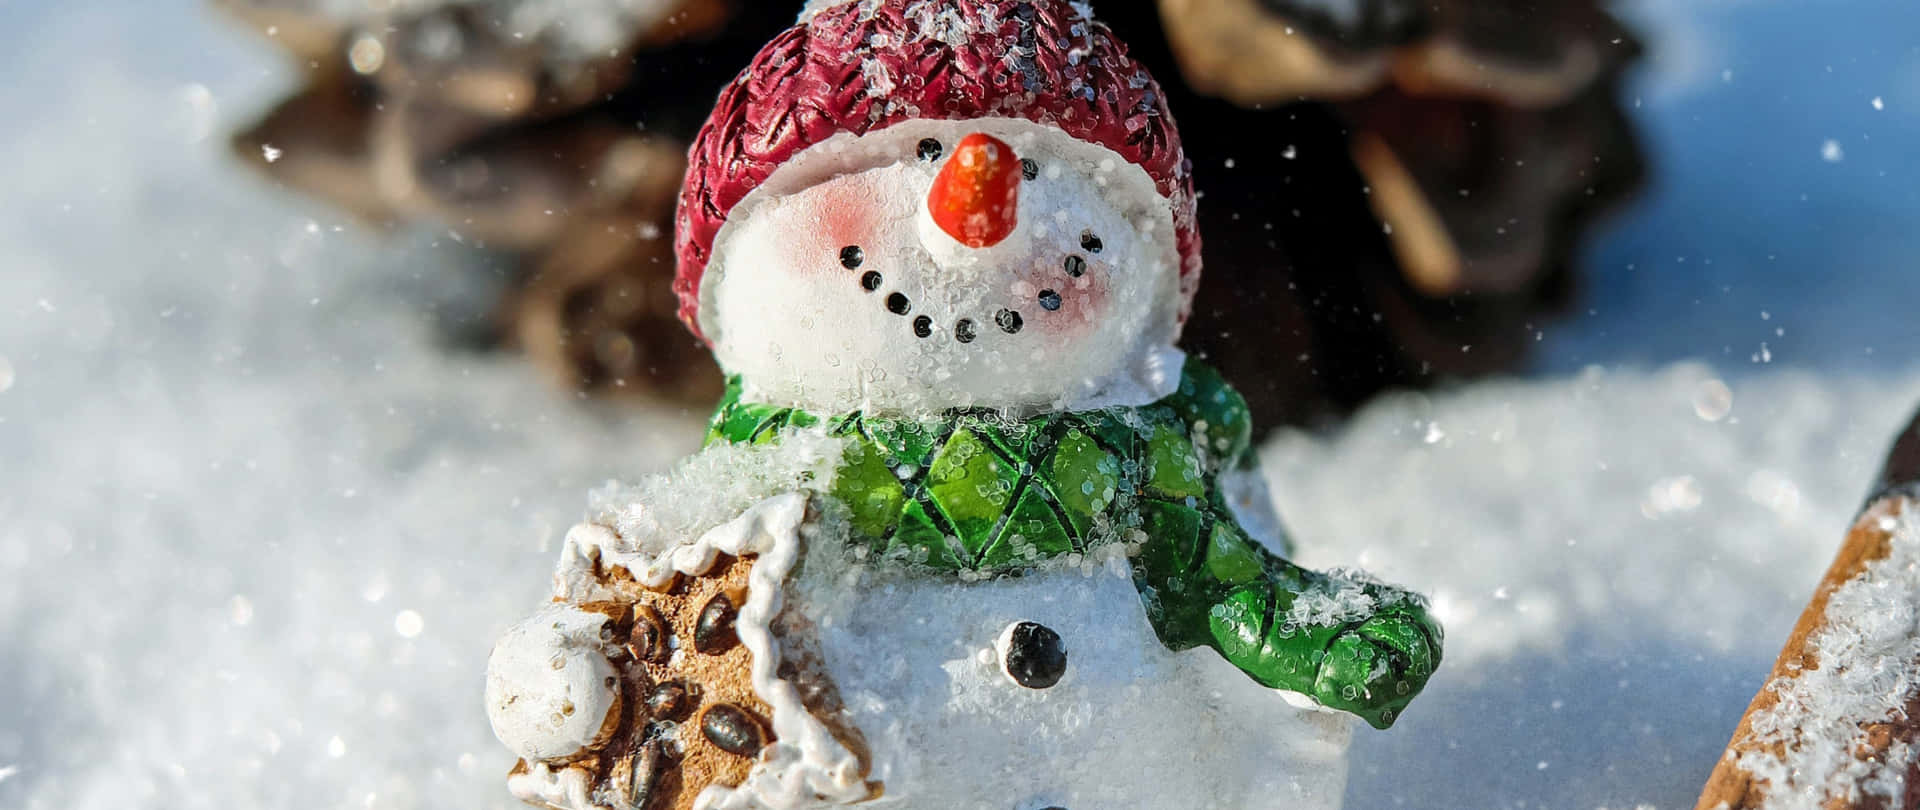 Festive Snowman Figurinein Snow Wallpaper